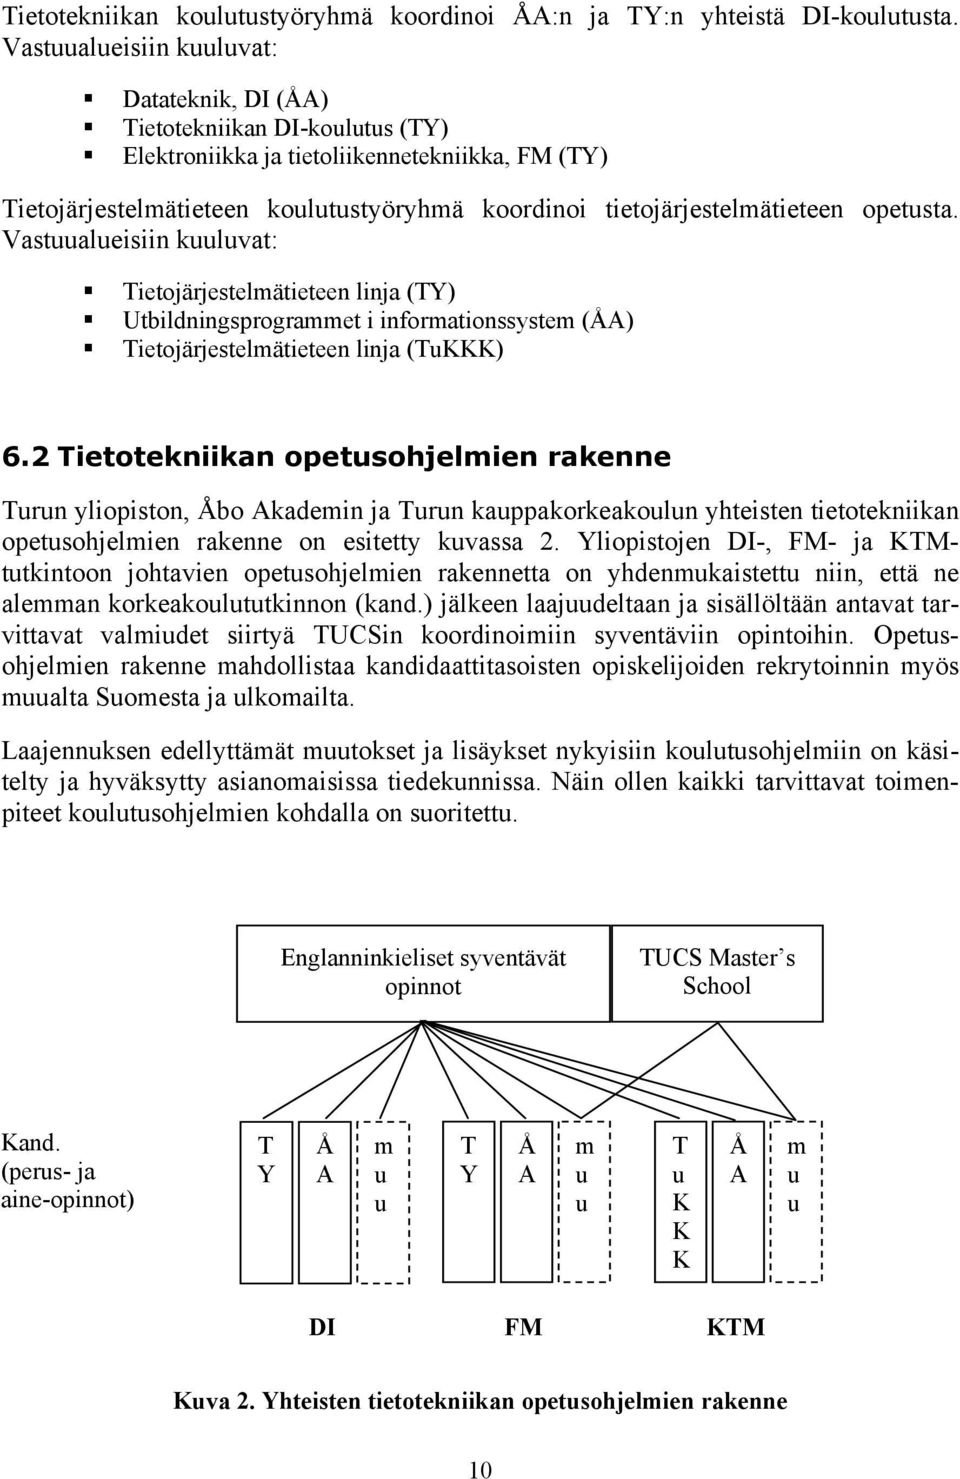 tietojärjestelmätieteen opetusta. Vastuualueisiin kuuluvat: Tietojärjestelmätieteen linja (TY) Utbildningsprogrammet i informationssystem (ÅA) Tietojärjestelmätieteen linja (TuKKK) 6.